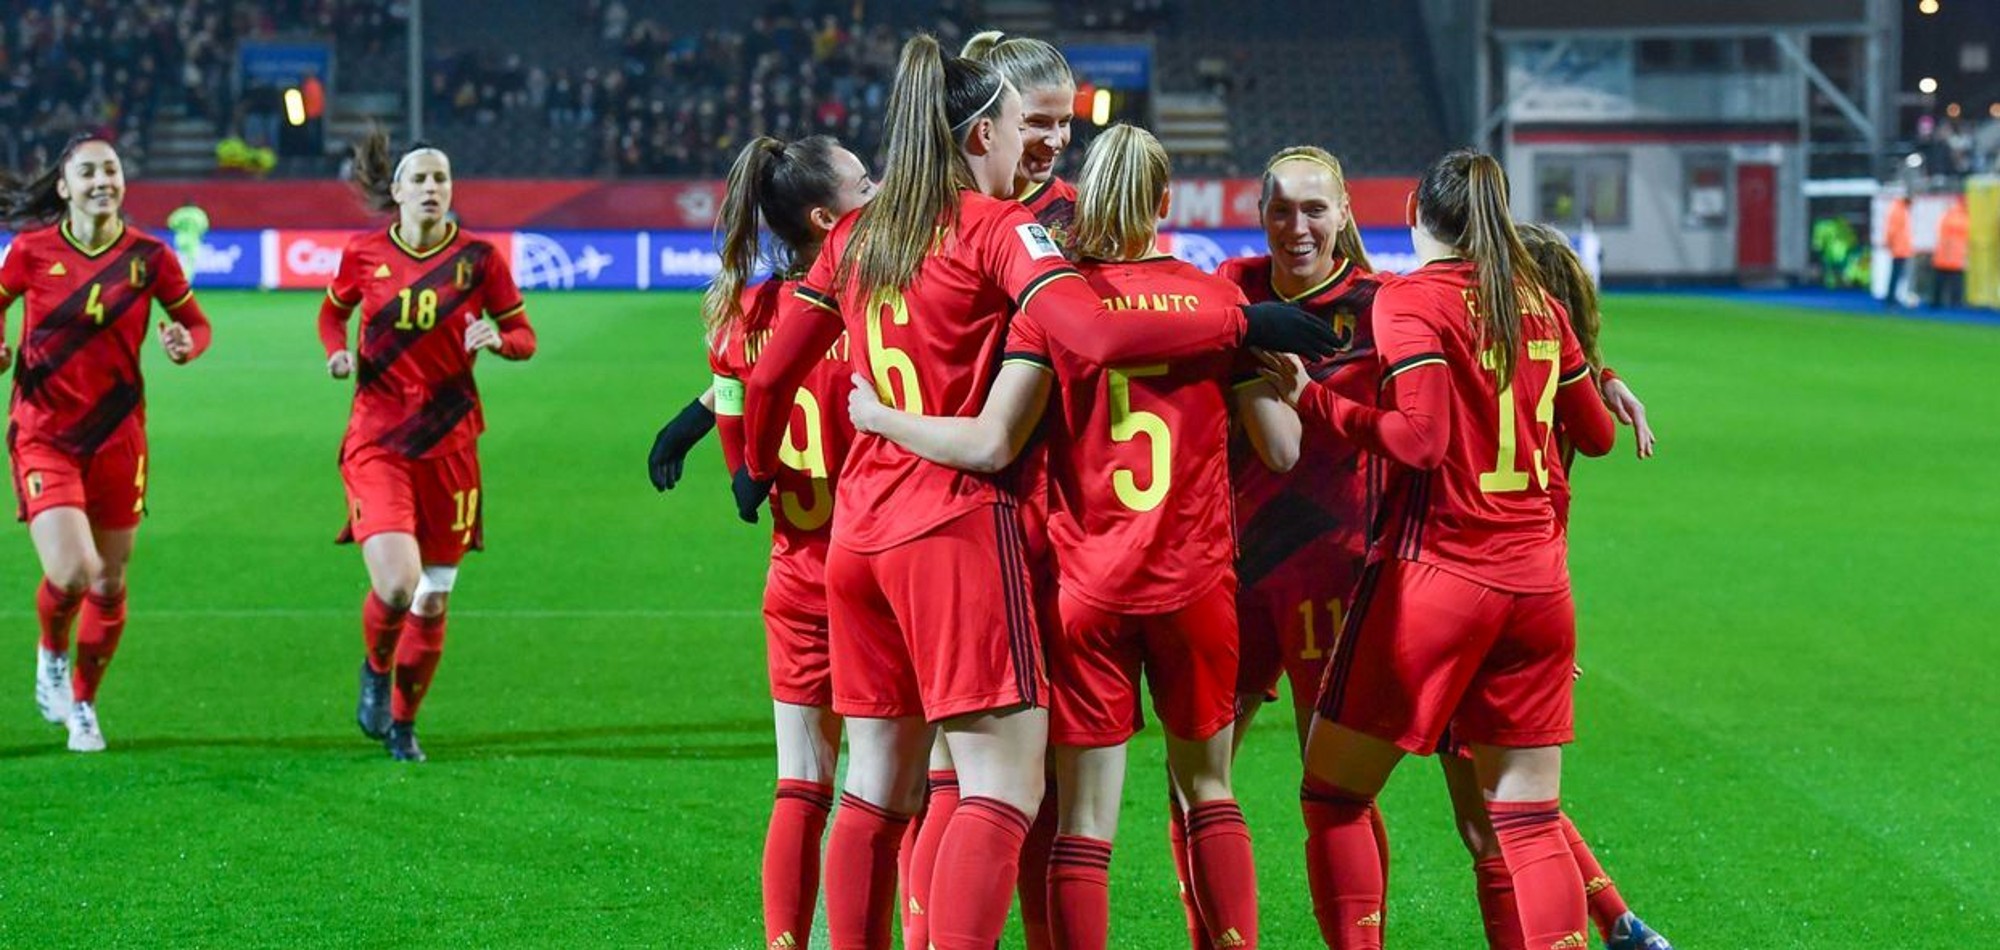 One five-goal haul and two hat-tricks - Belgium hammer Armenia 19-0